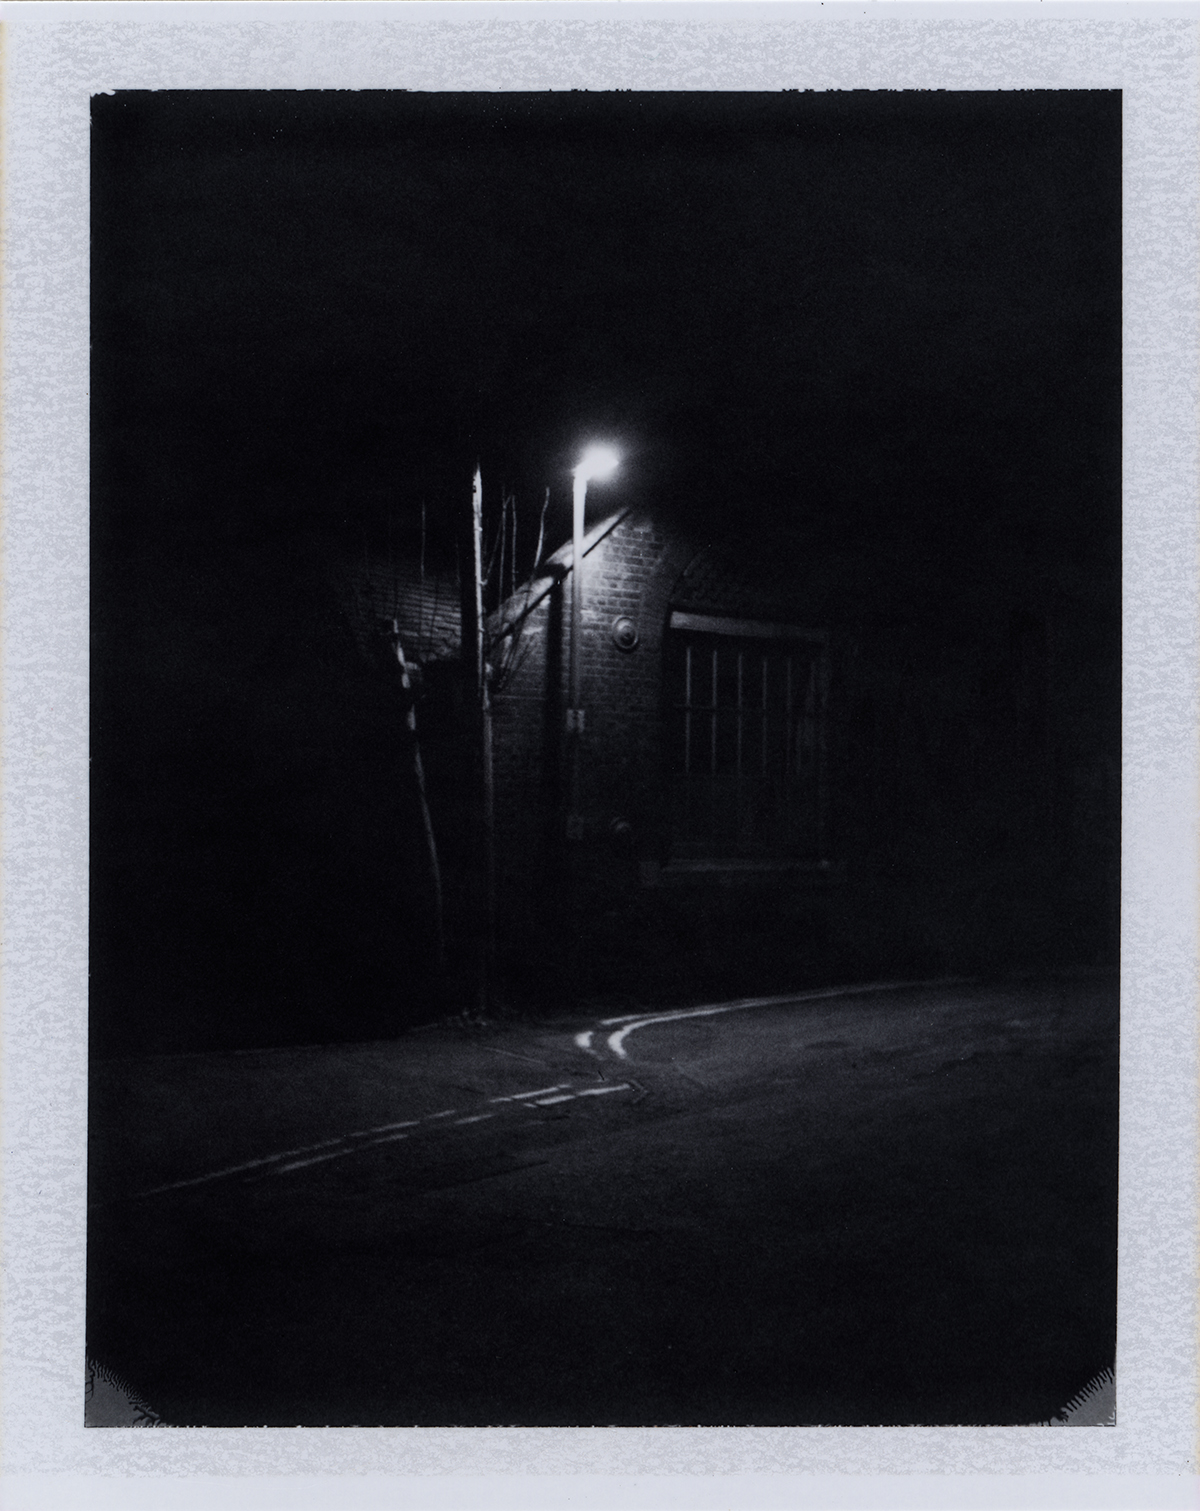 Magical streetlight [Polaroid Land Camera 190]